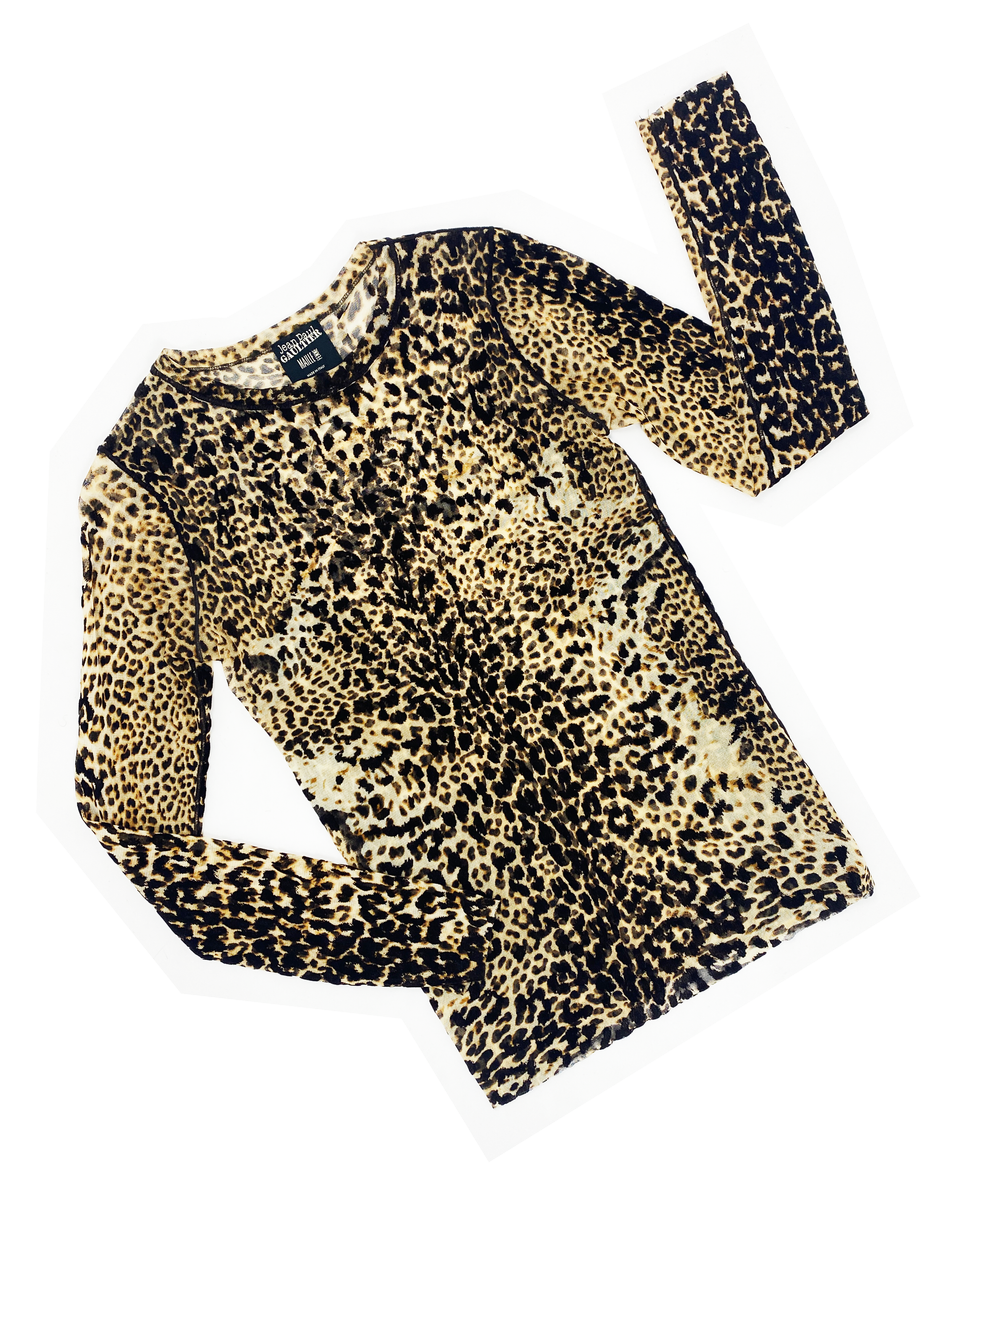 Leopard Print PNG Transparent Images - PNG All